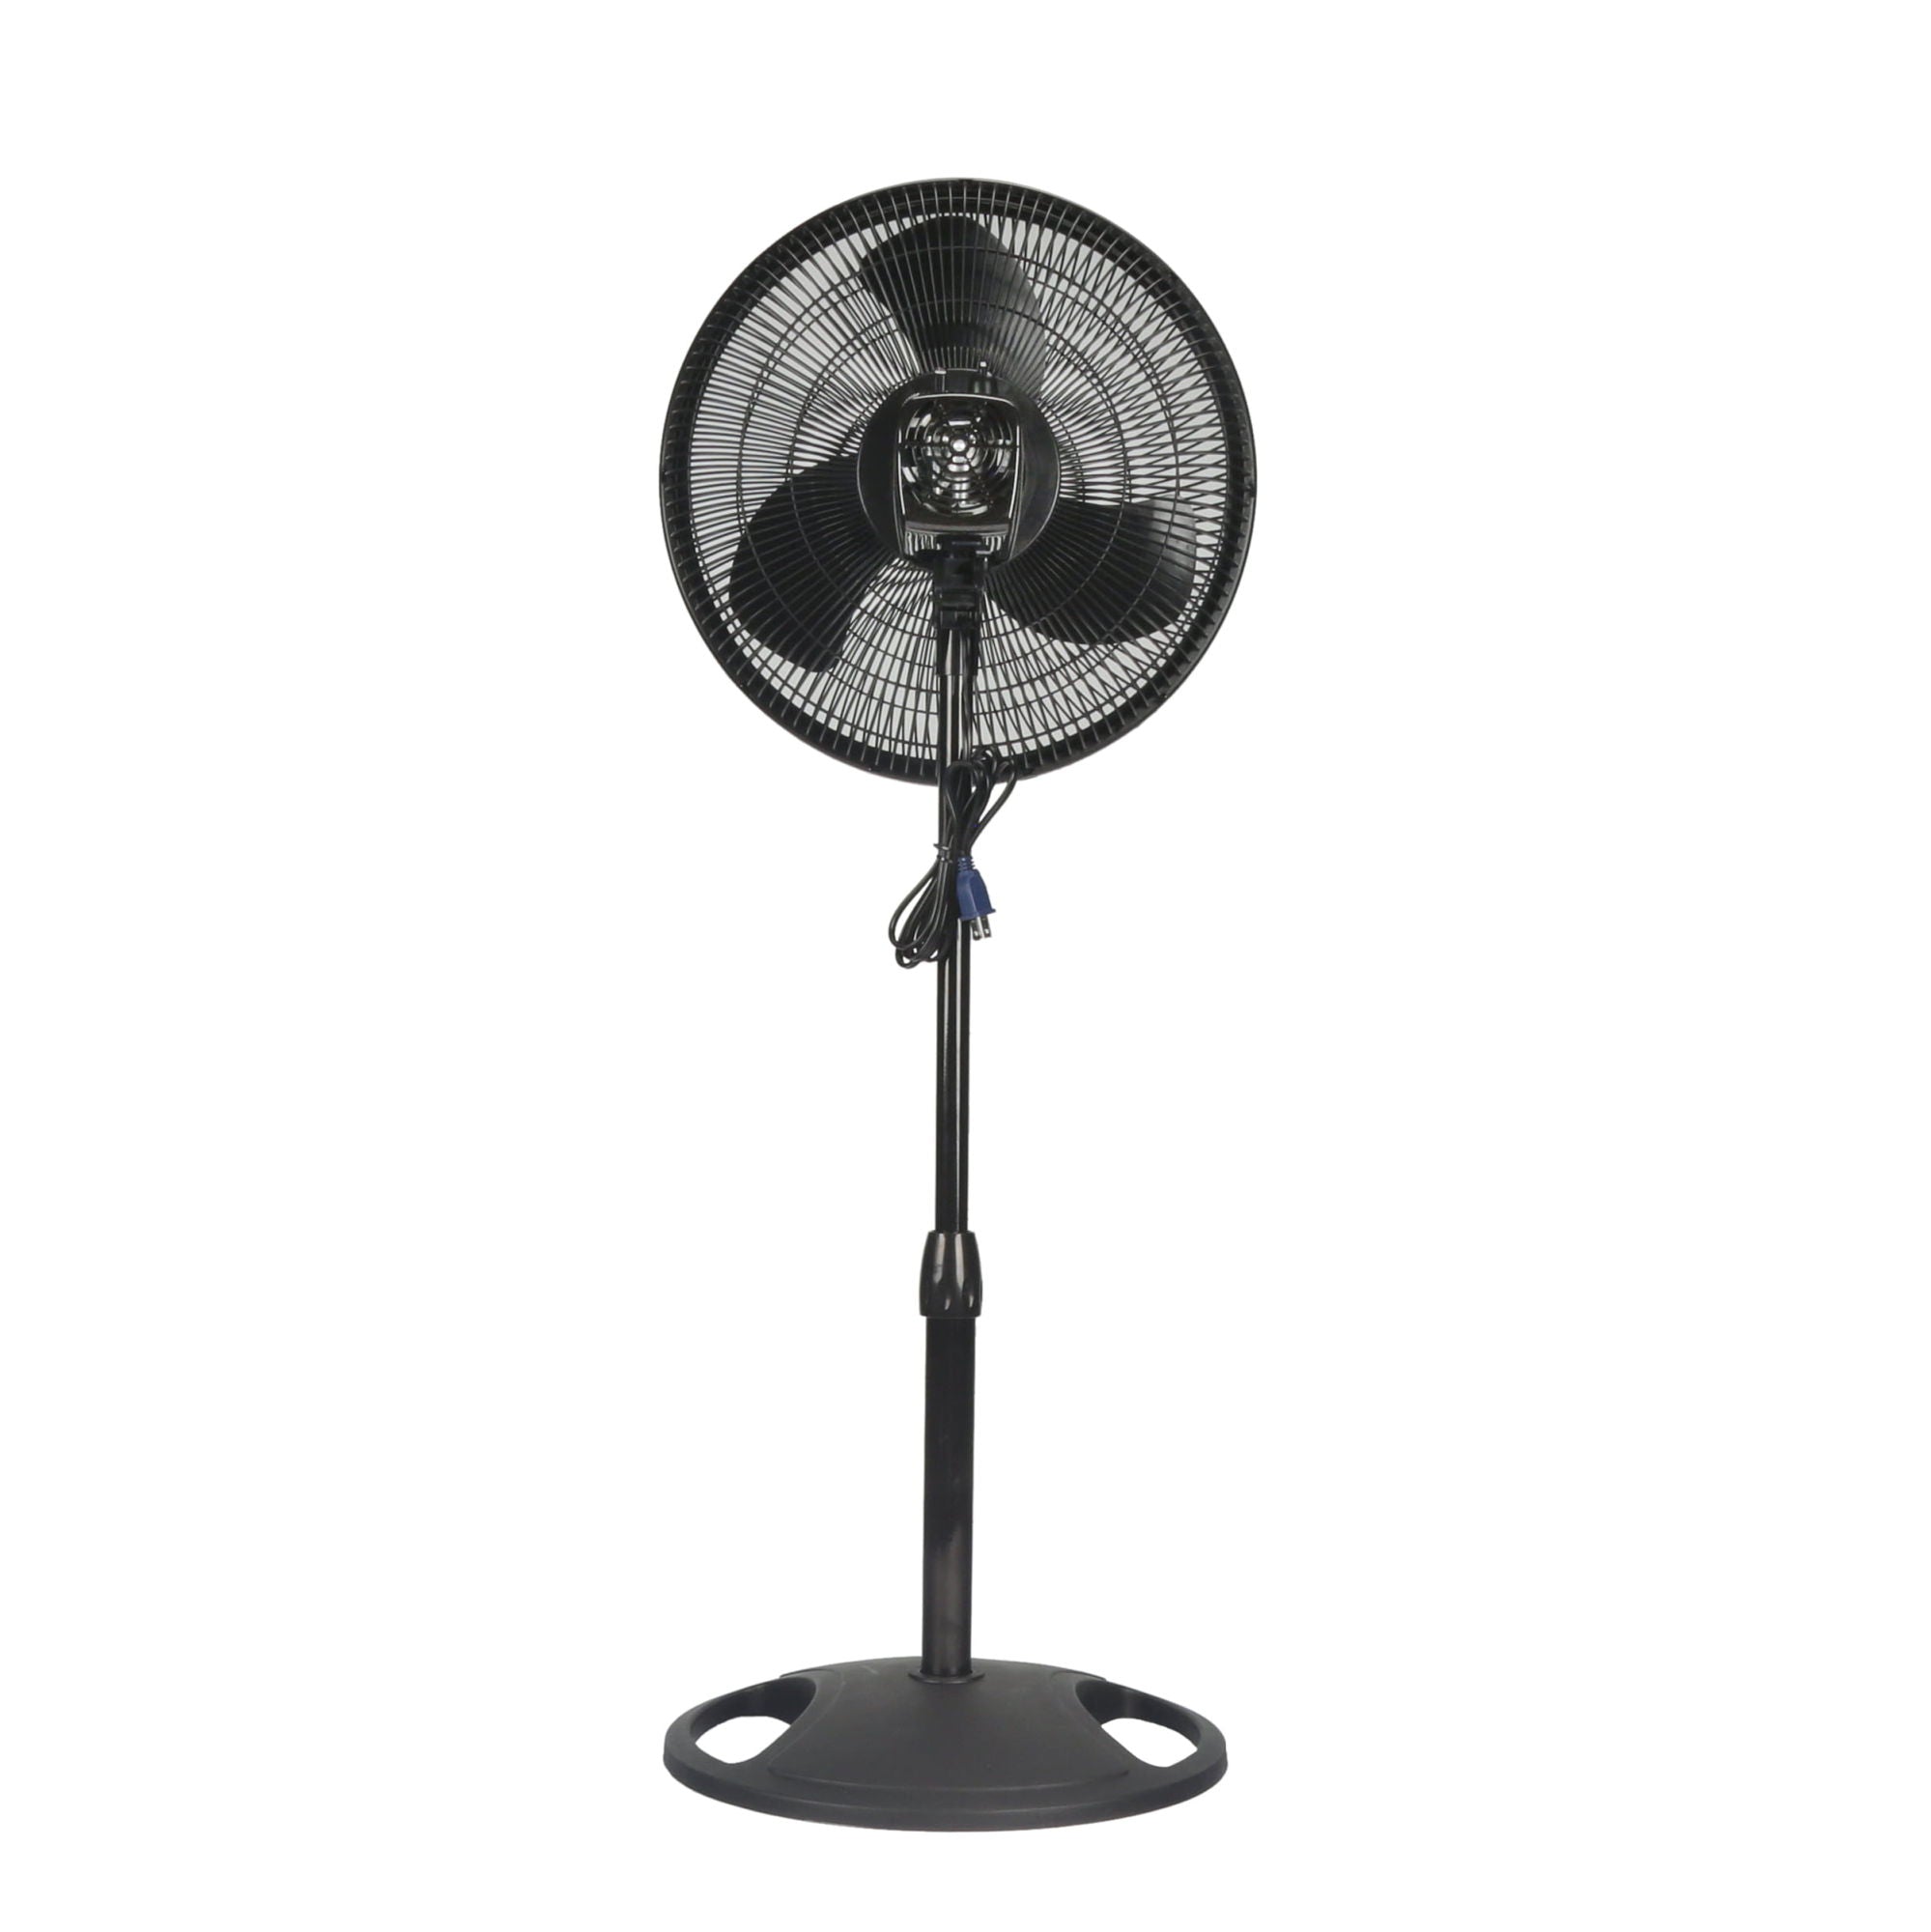 16 Inch Oscillating Adjustable High Speed Pedestal Fan